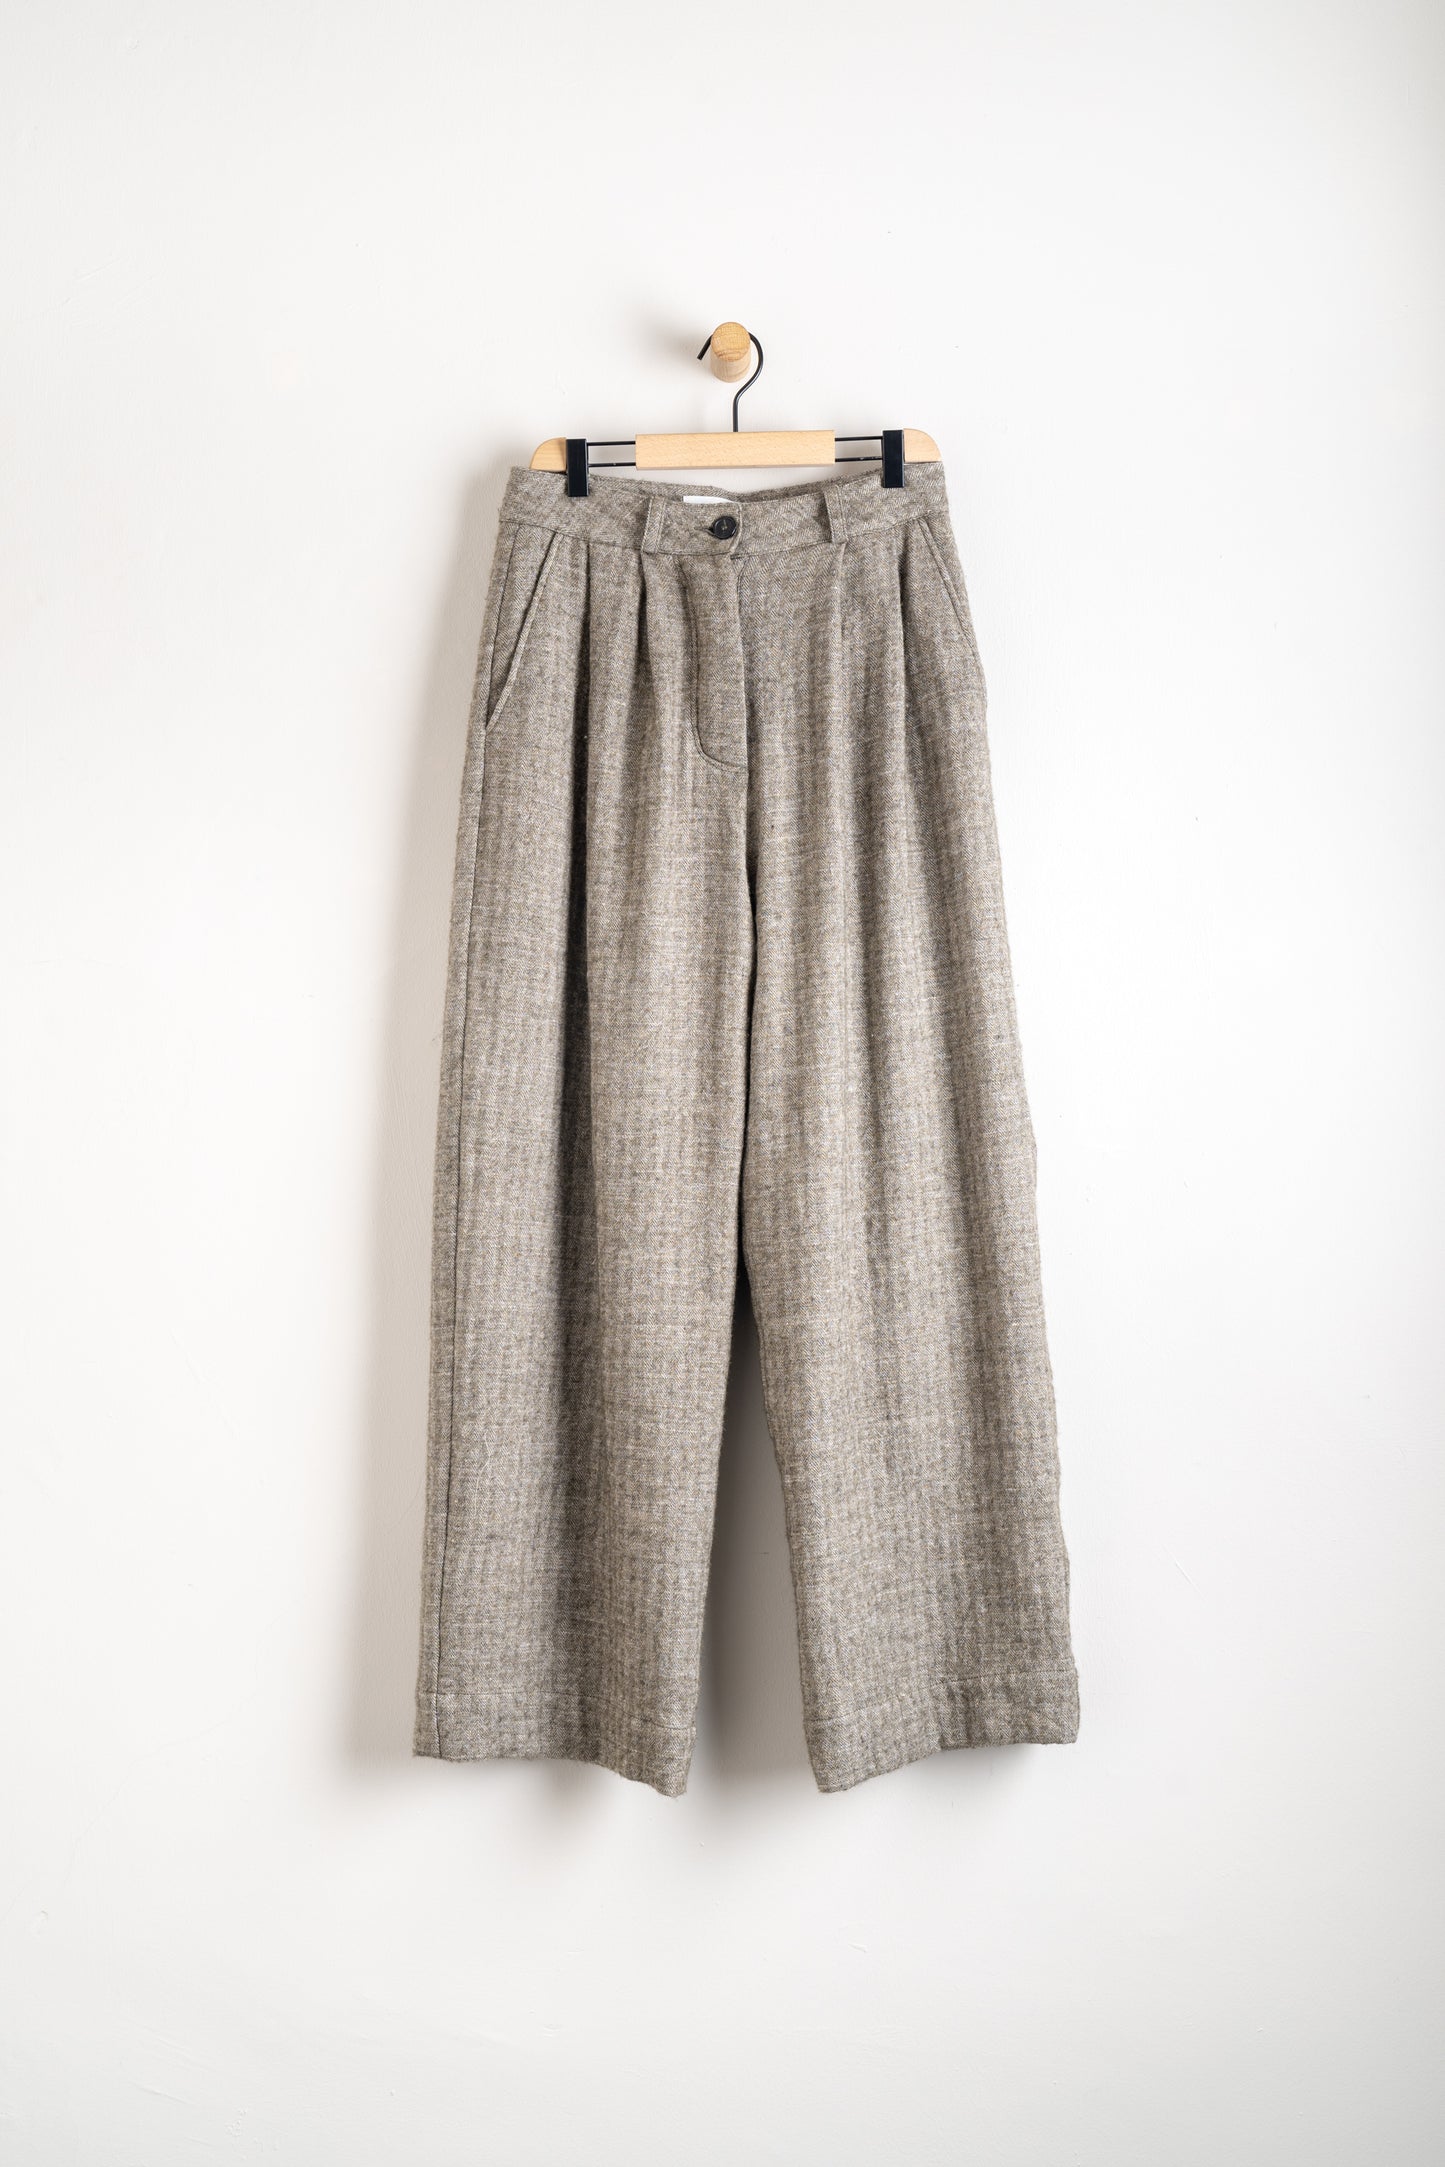 Cawley Studio Japanese Linen Wool Mara Trouser